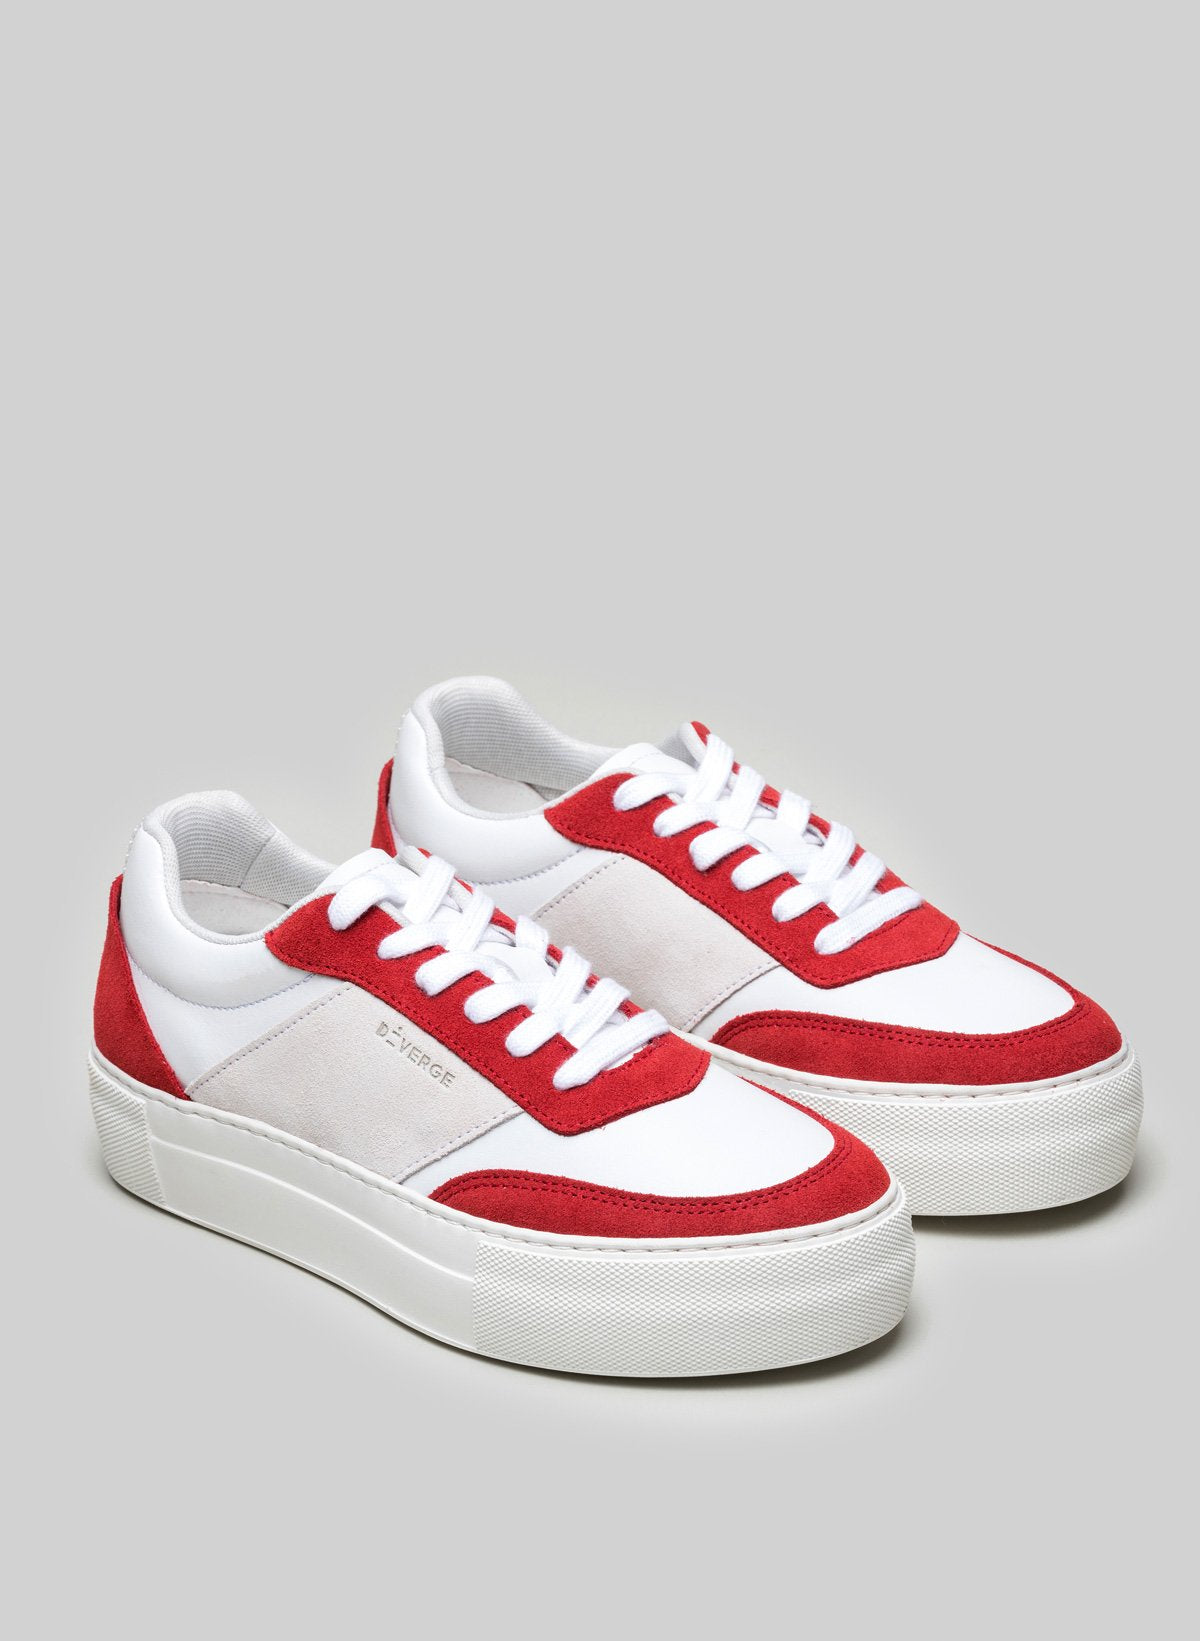 Diverge rouge, blanc et gris custom low top sneakers.